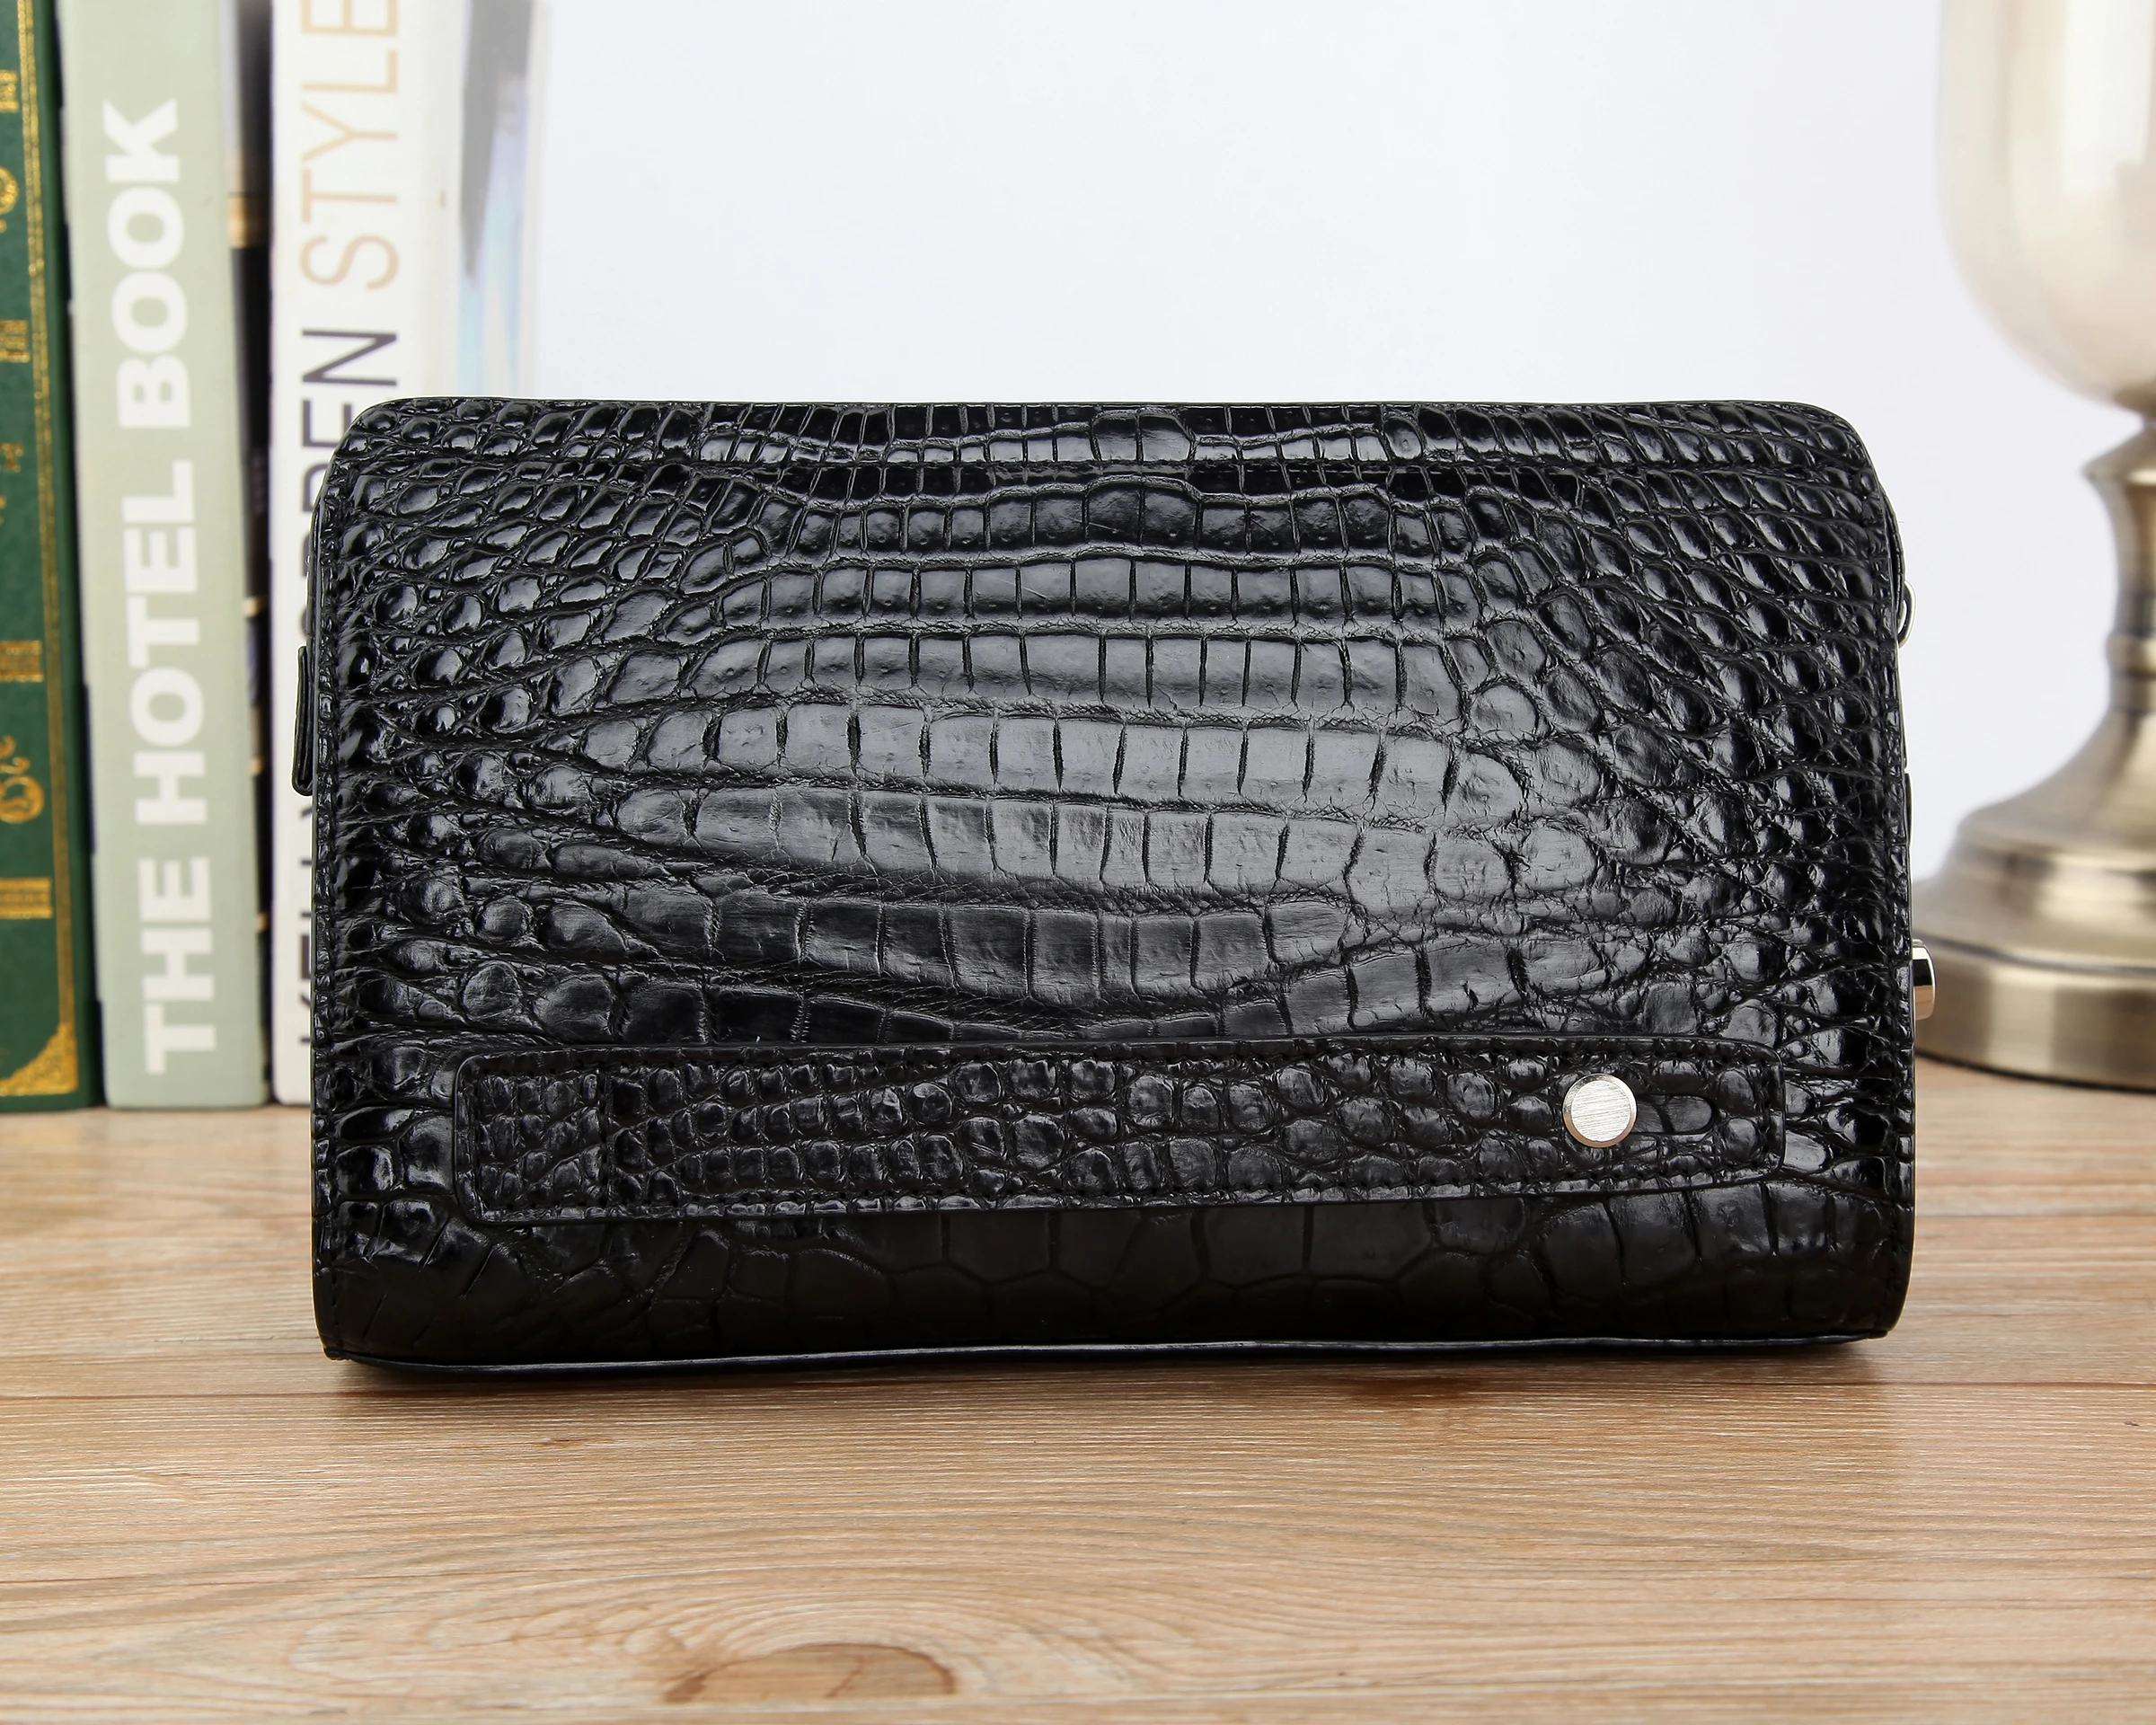 

Newly genuine crocodile leather alligator belly skin long size men wallet zip closure money cash coin wallet holder case purse